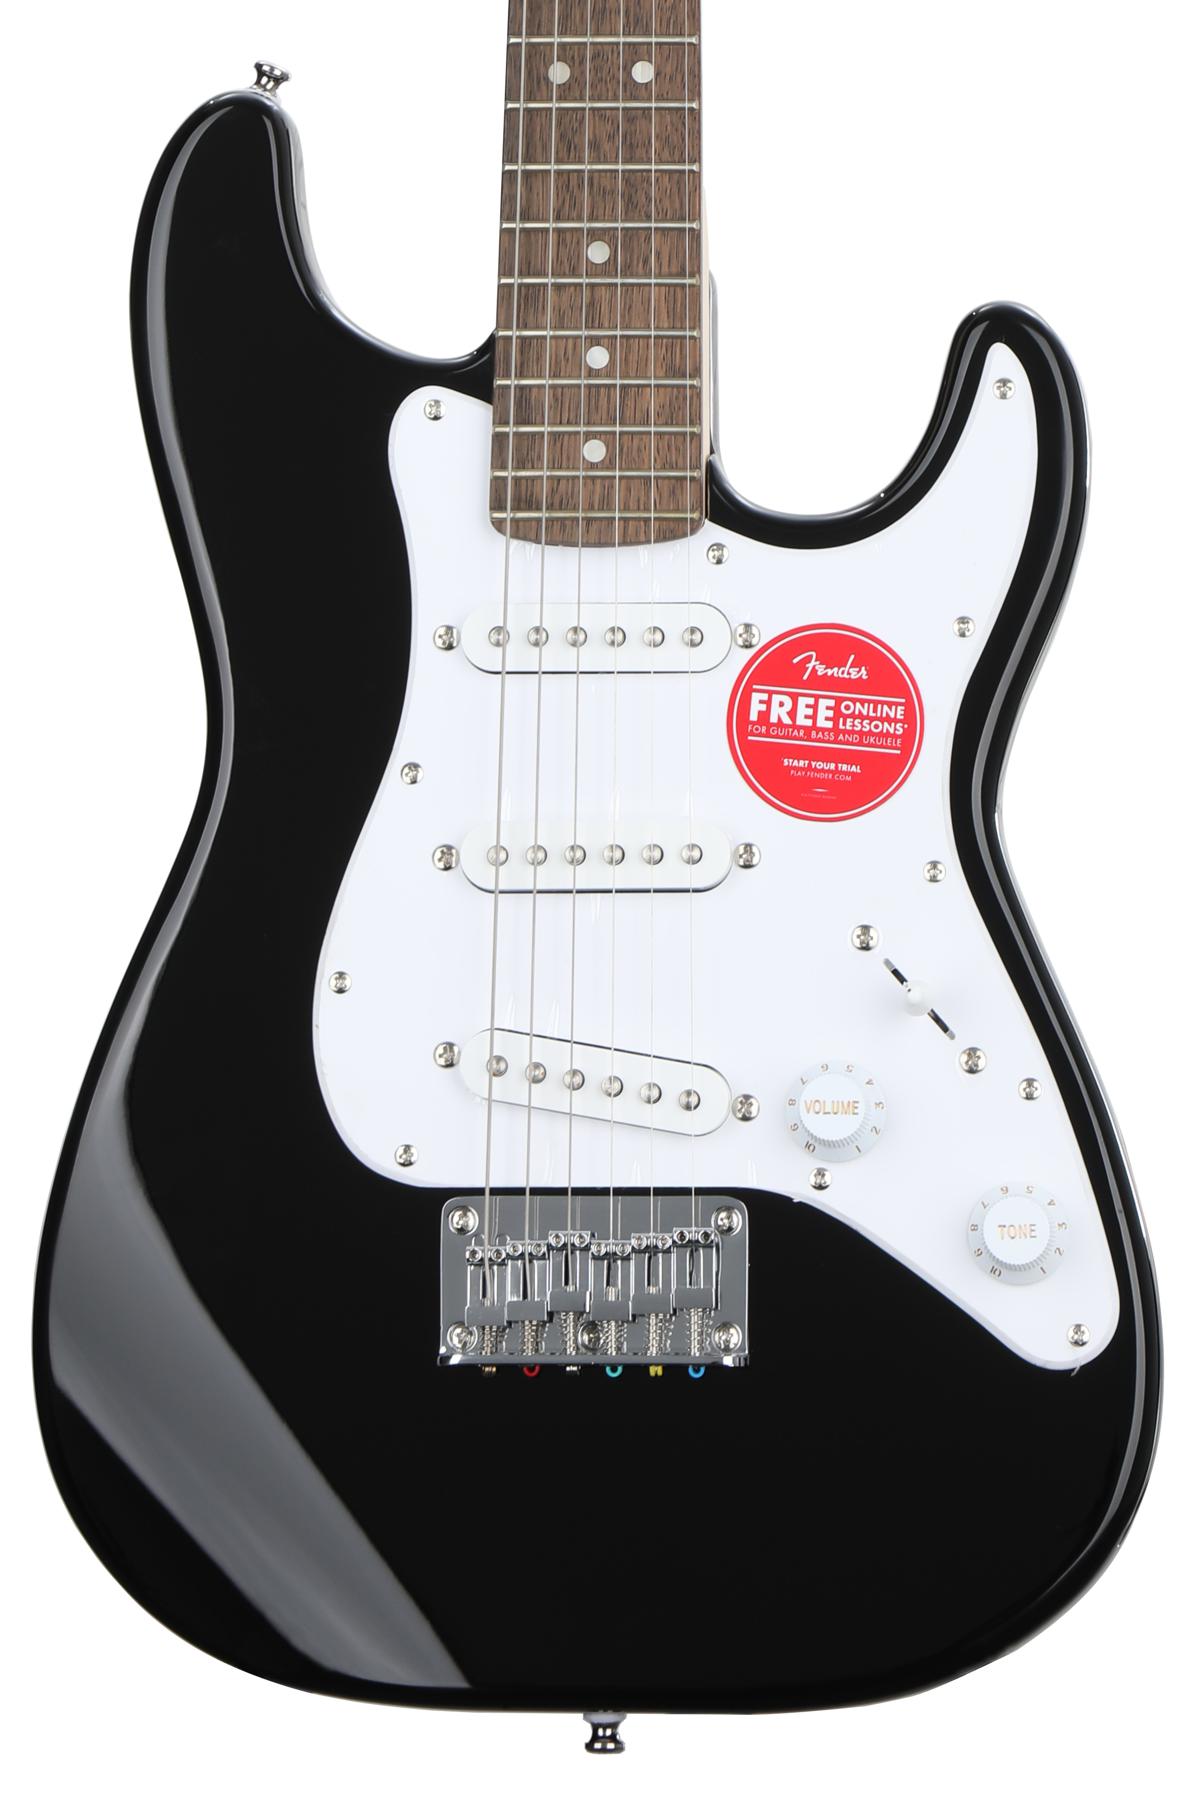 1. Editor's Choice – Squier Mini Strat Electric Guitar